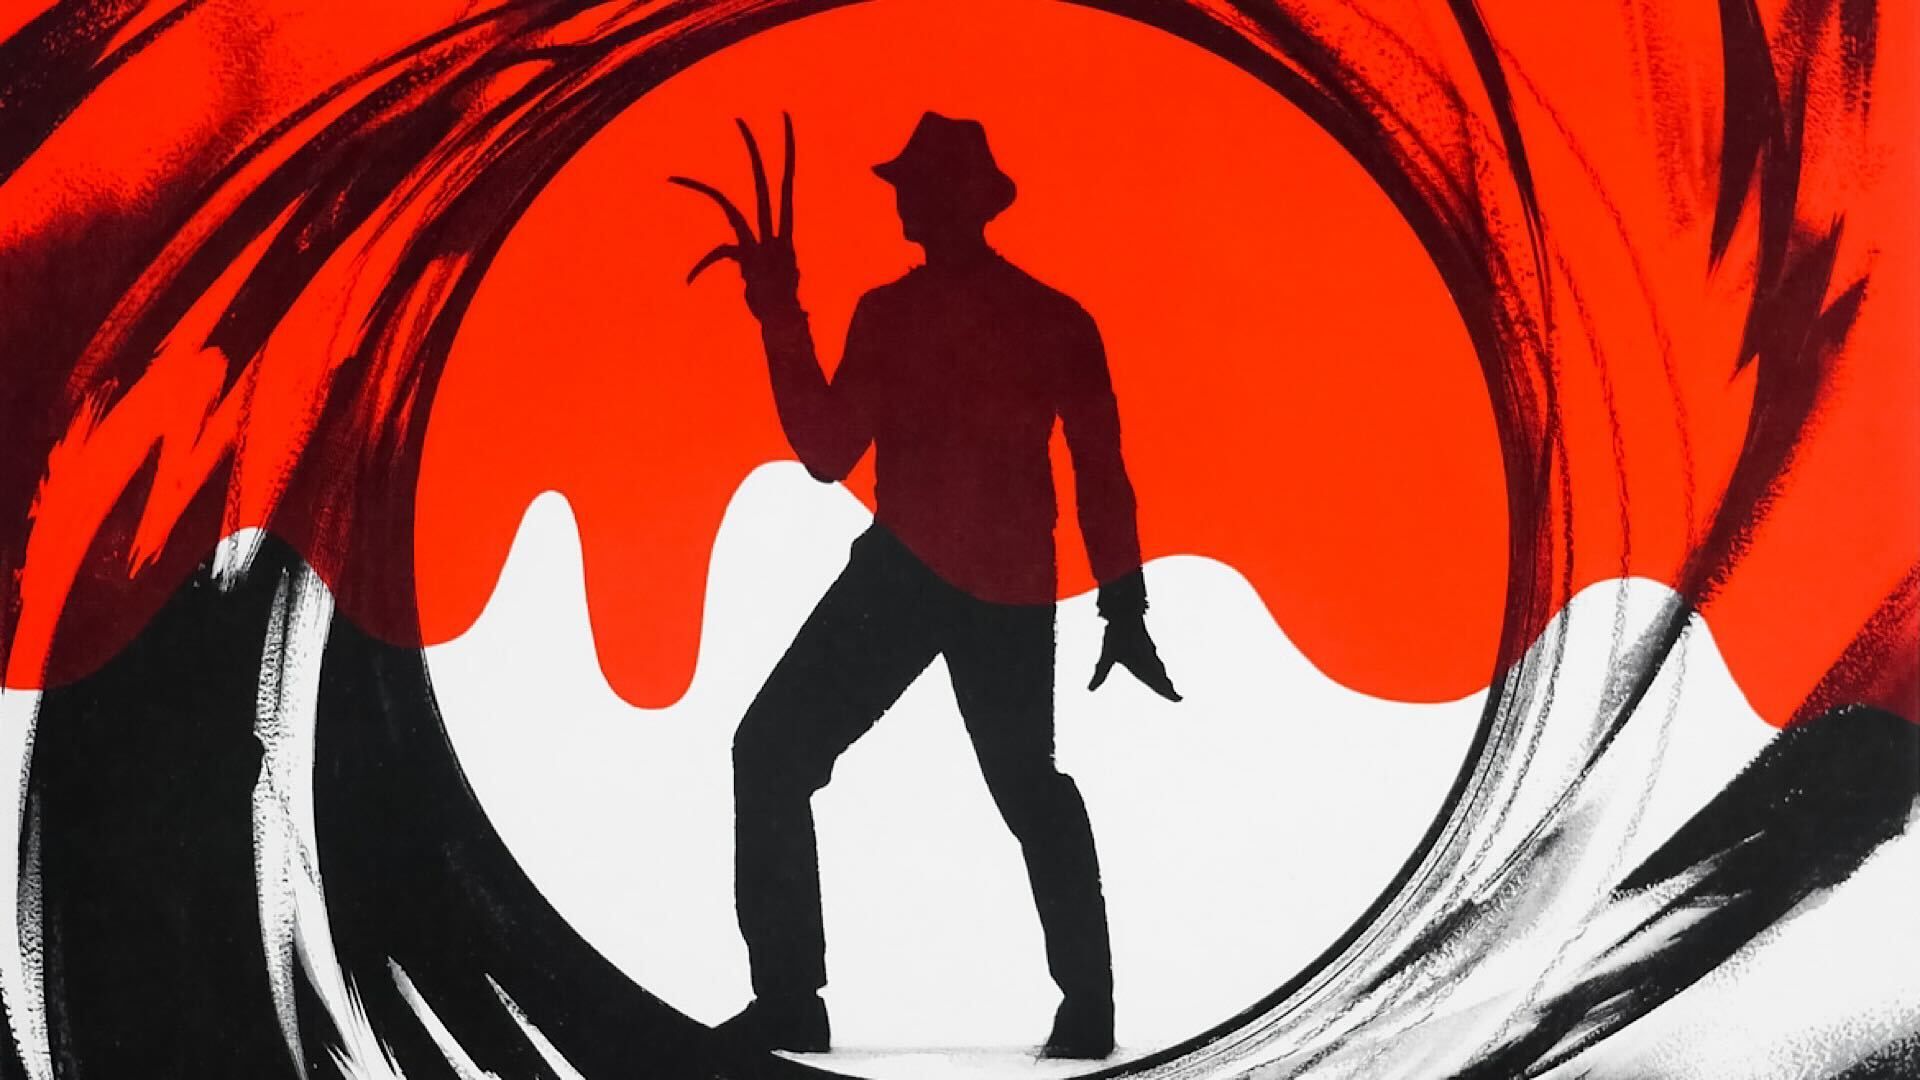 Freddy Krueger Stylised as James Bond in movie marketing poster